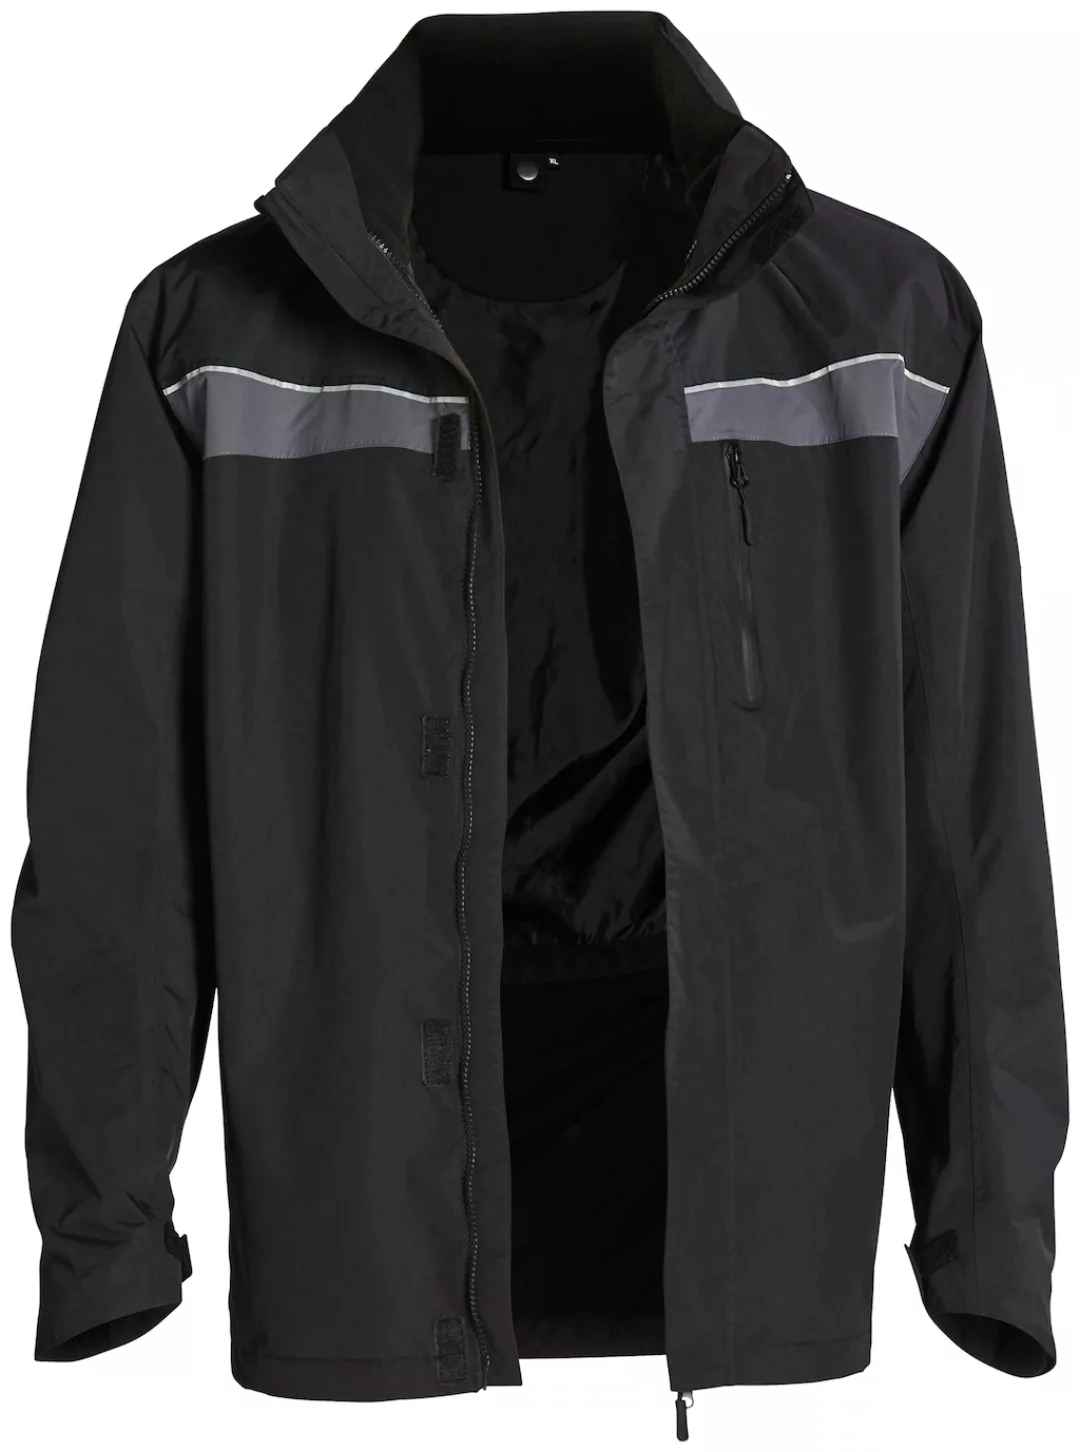 Northern Country Arbeitsjacke, 3 in 1 Jacke, mit herausnehmbarer Fleecejack günstig online kaufen